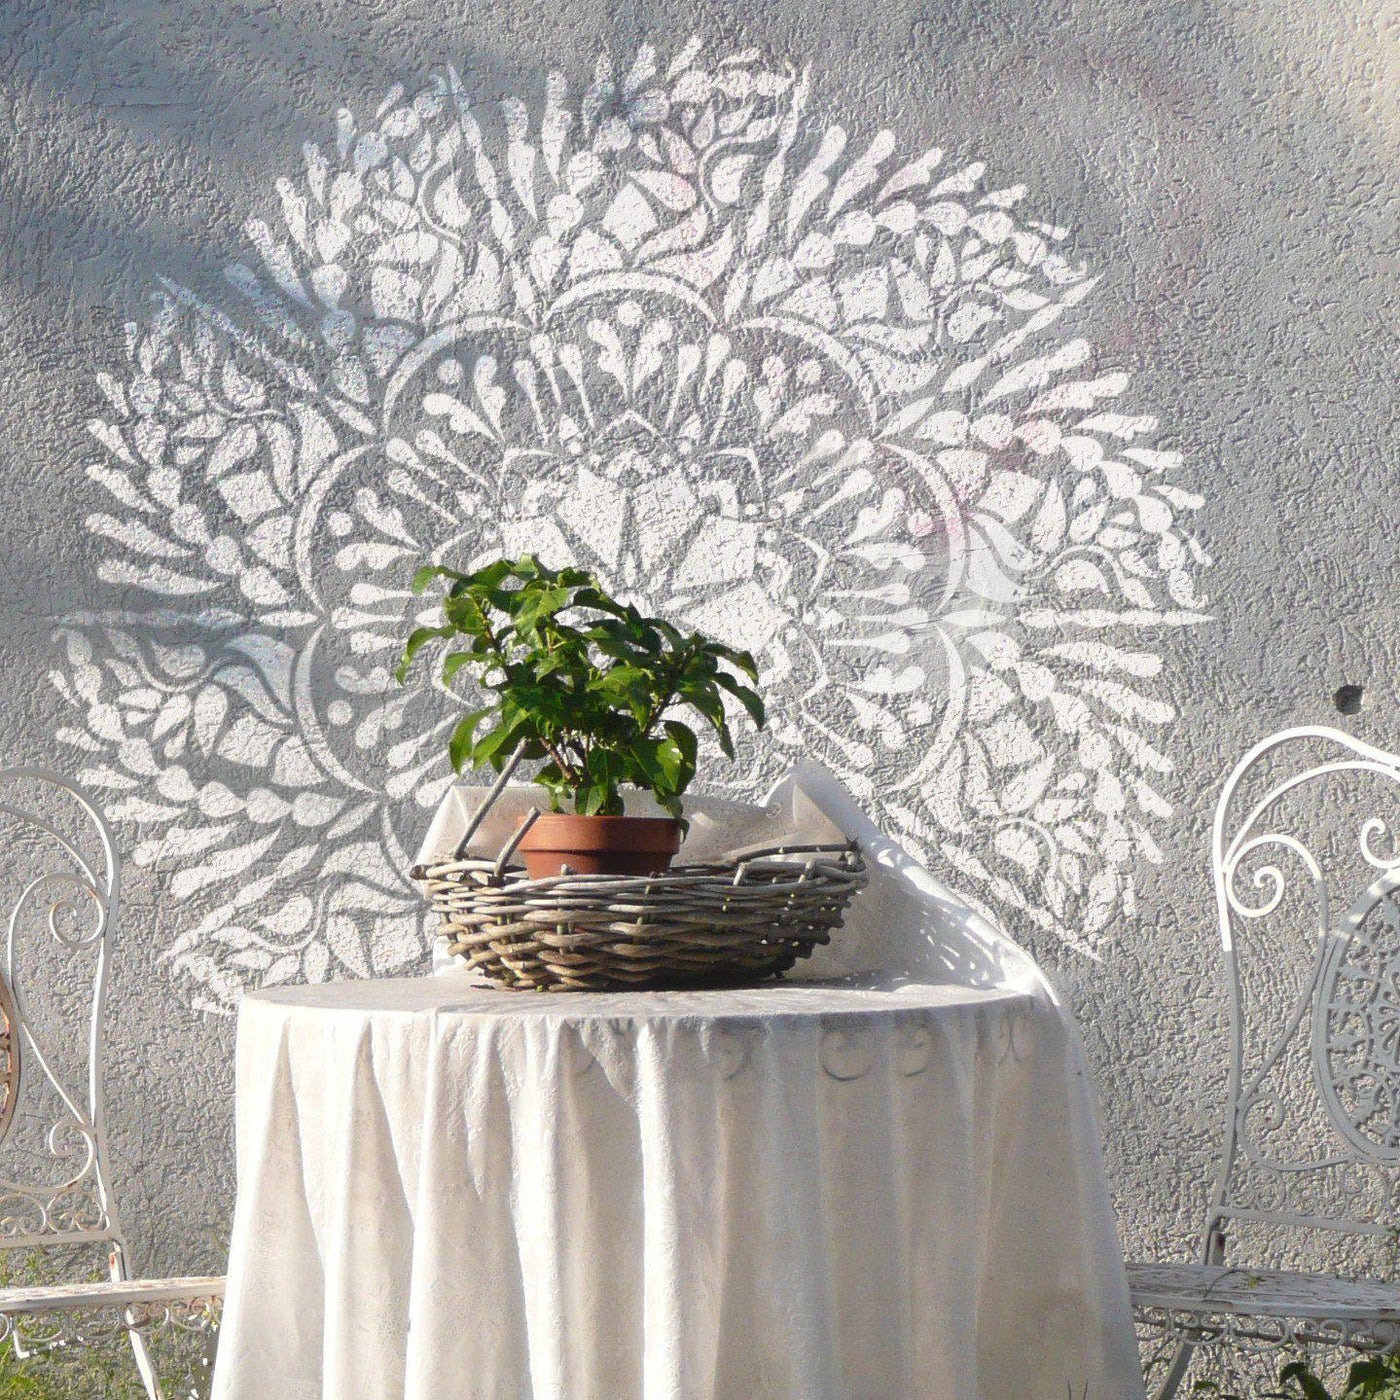 Mandala Wall Stencils - Original Mandala Design- Mandala Stencil- Floor Stencil 16